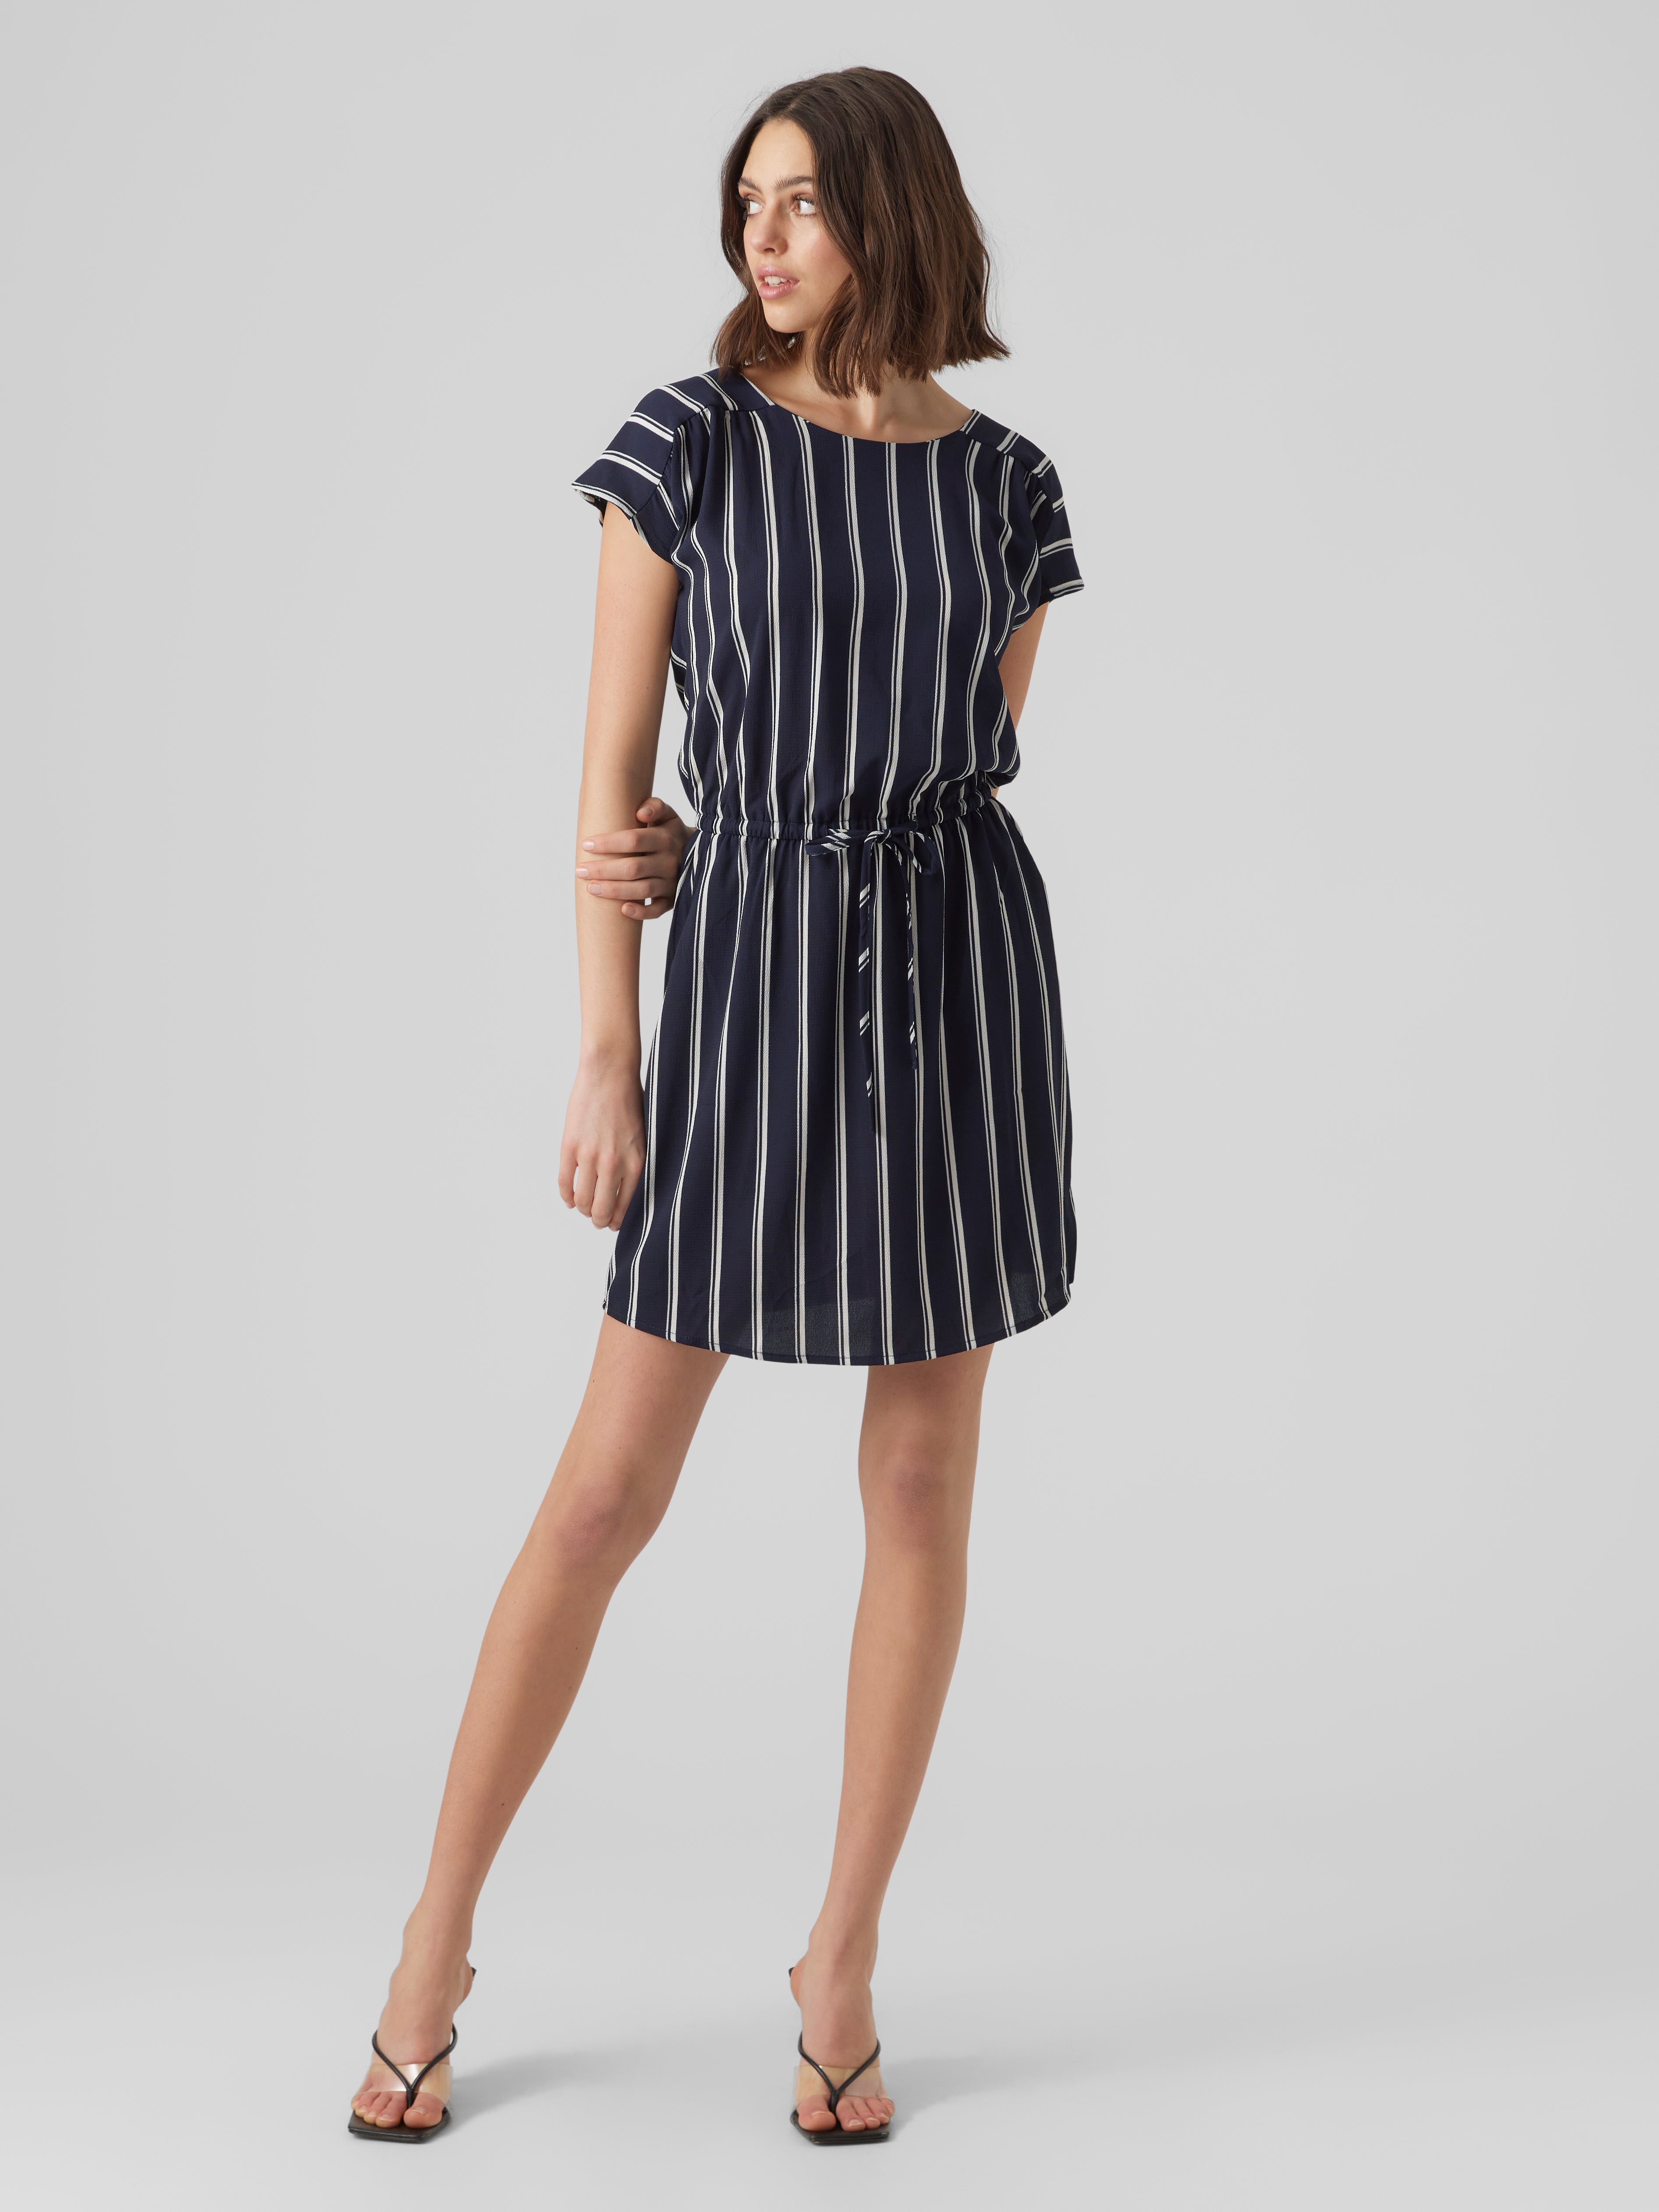 Short dress with discount! | Moda®